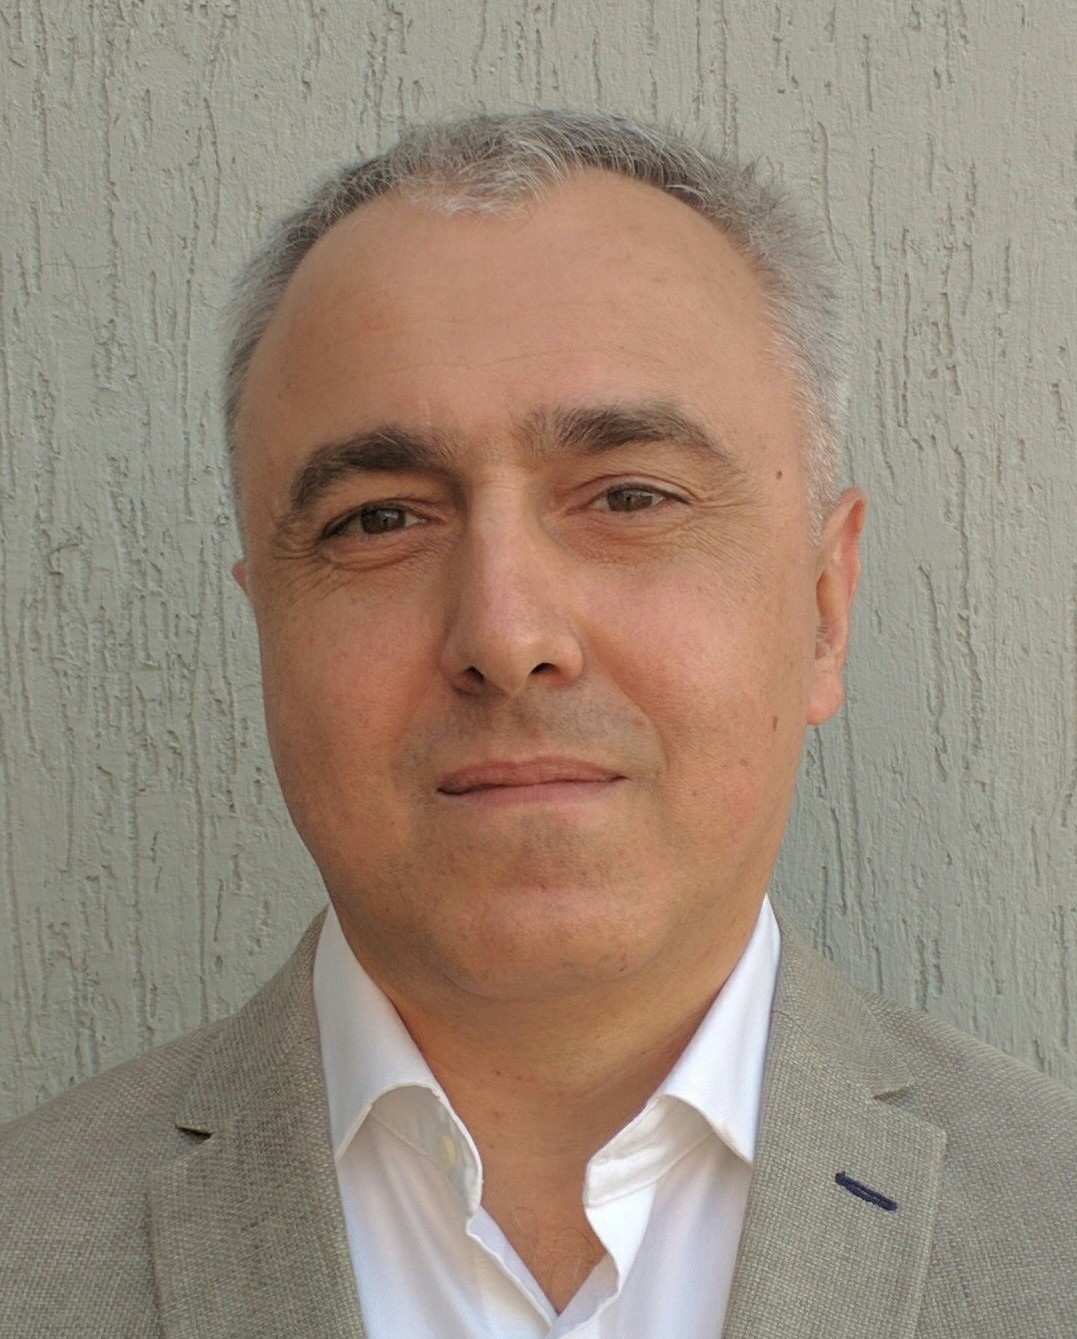 David Otiashvili